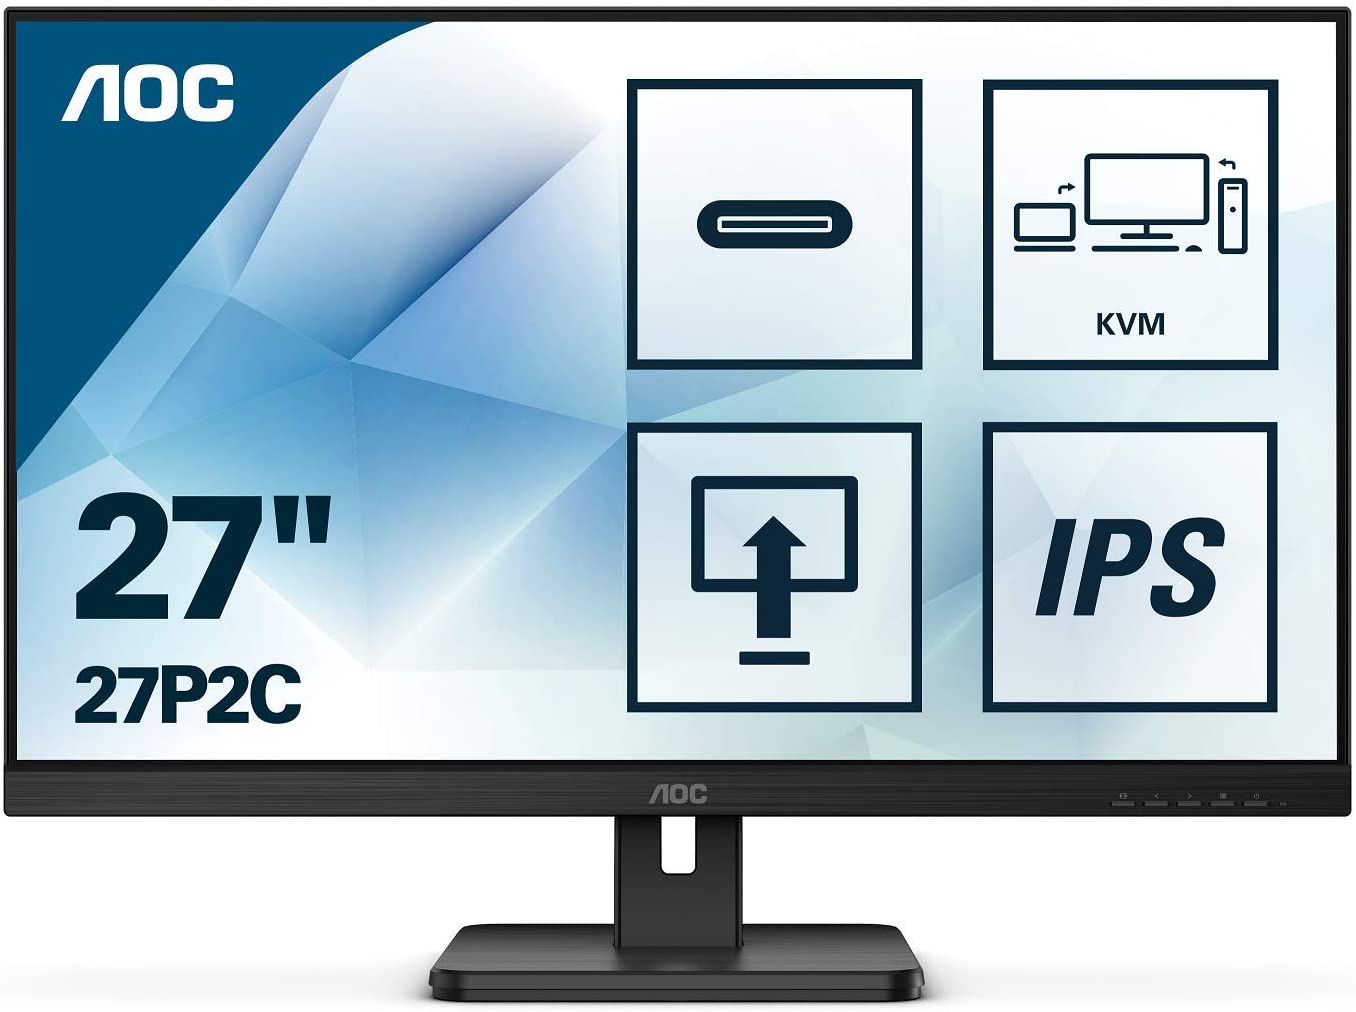 AOC 27P2C LED-Monitor (27P2C)